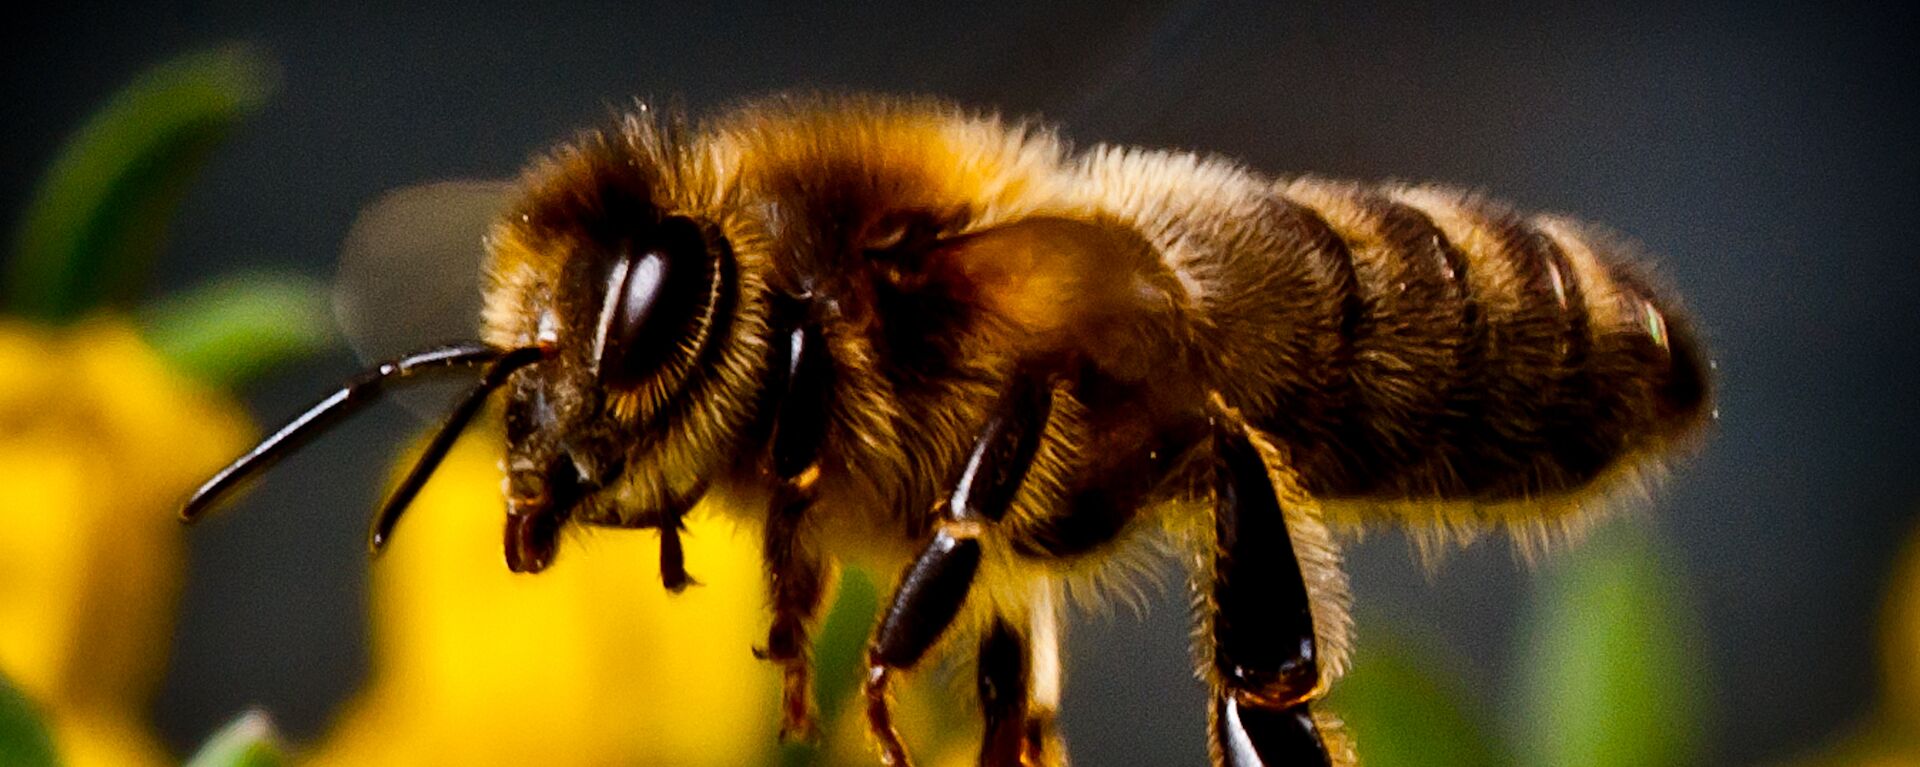 زنبور عسل/قاتل خطرناک‌ترین انواع سرطان - اسپوتنیک افغانستان  , 1920, 02.09.2020